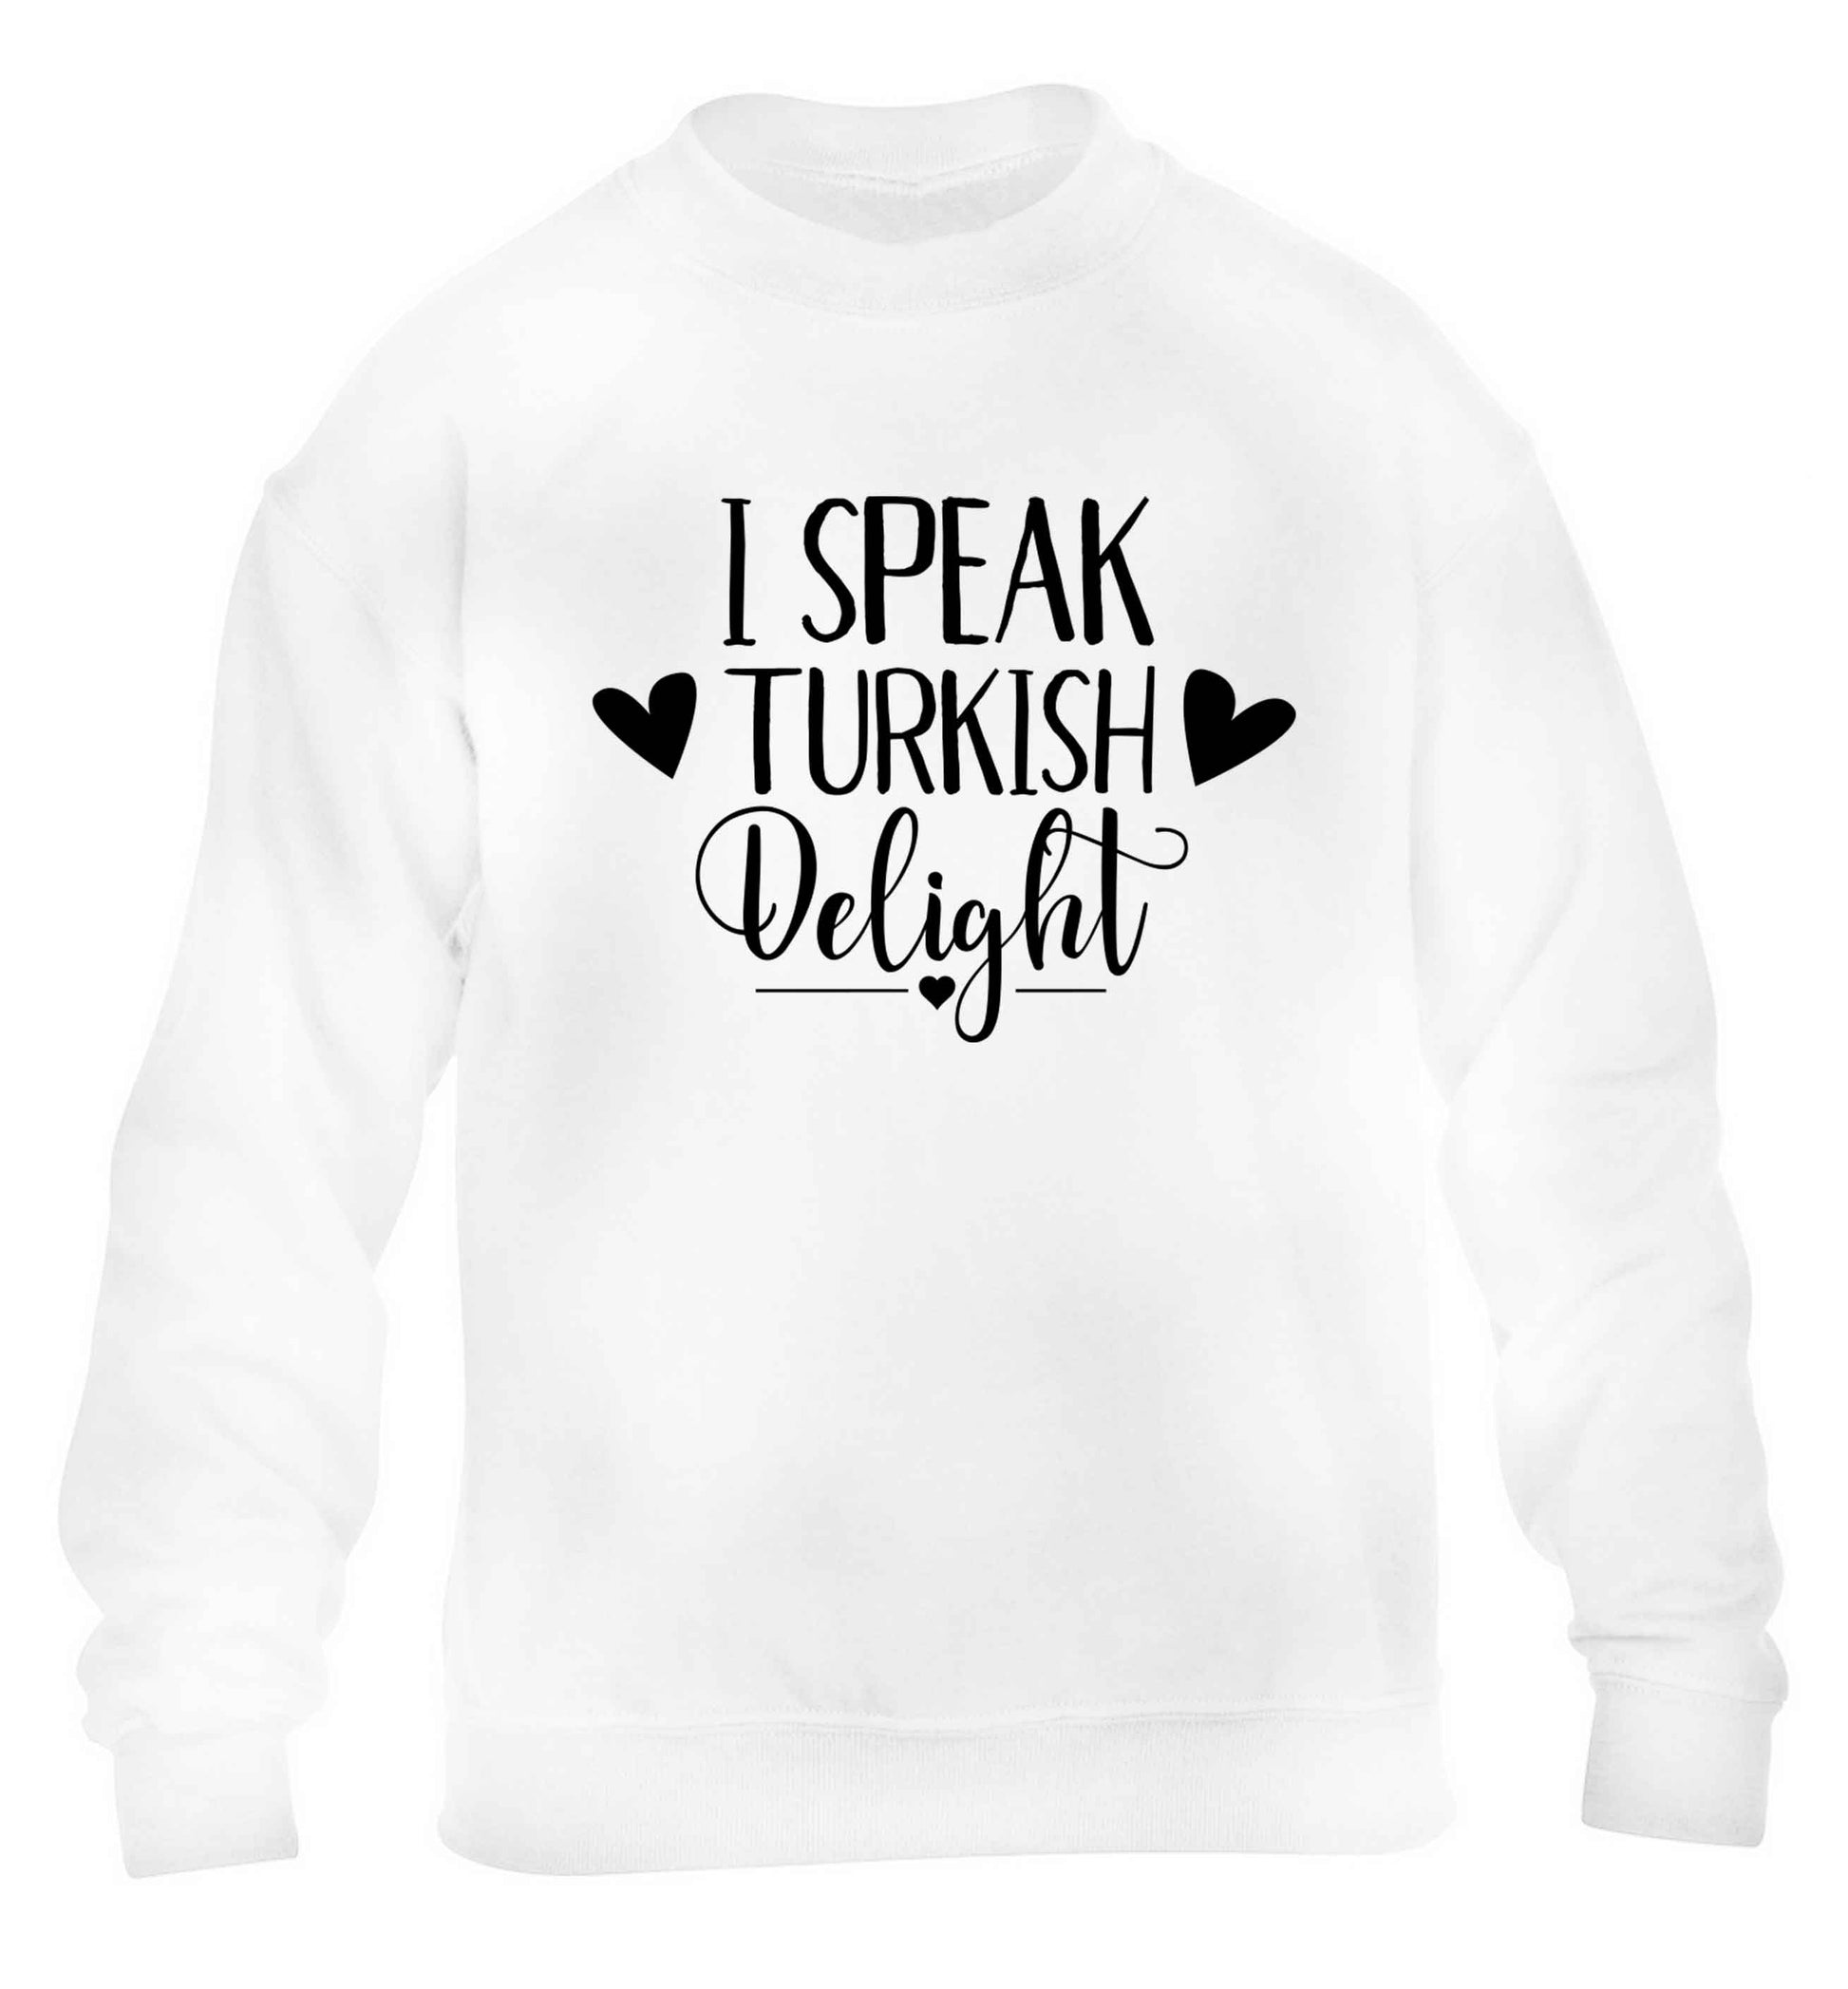 I speak turkish...delight children's white sweater 12-13 Years